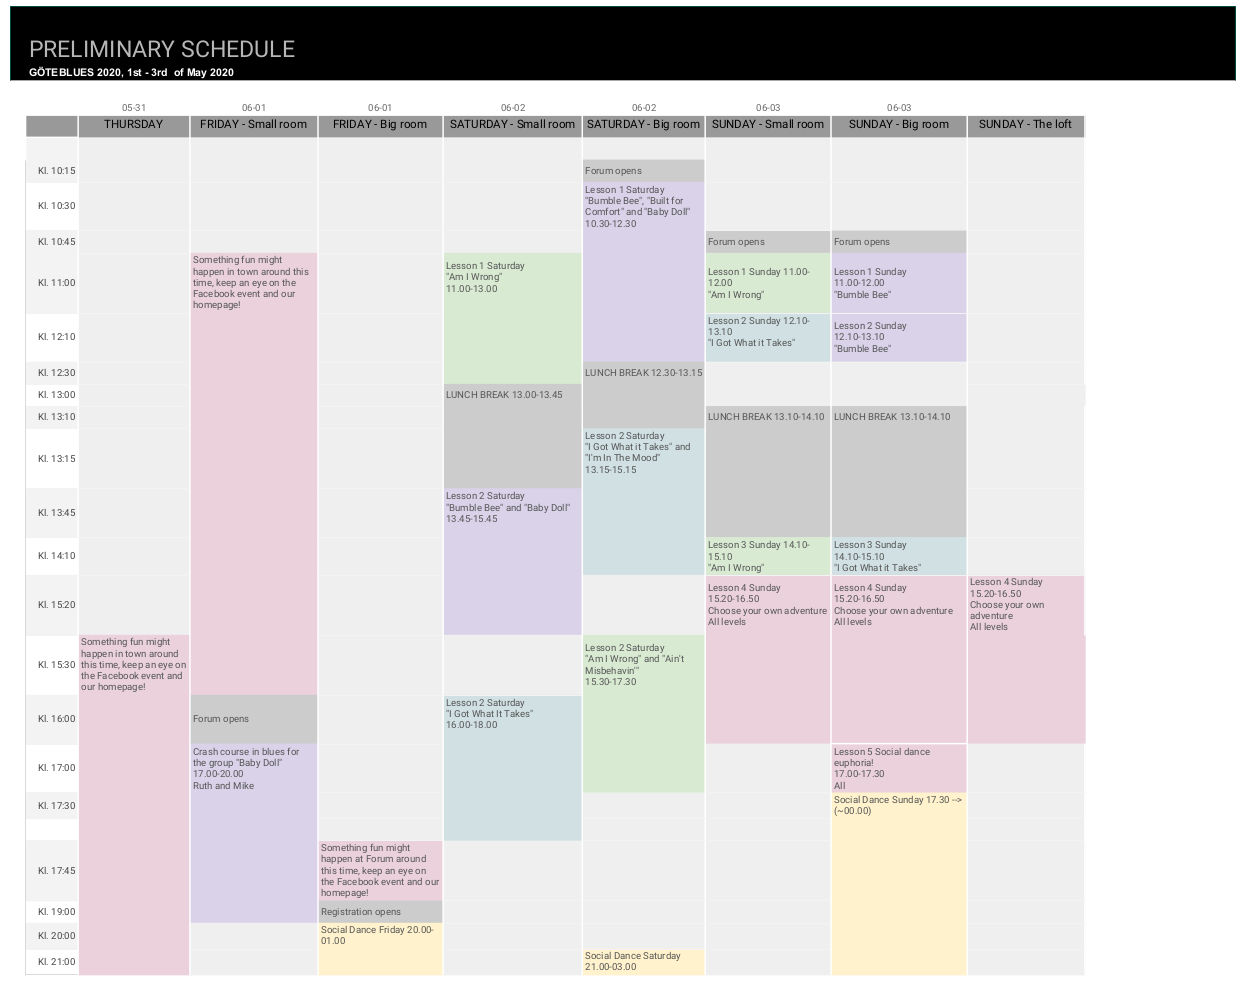 Preliminary schedule